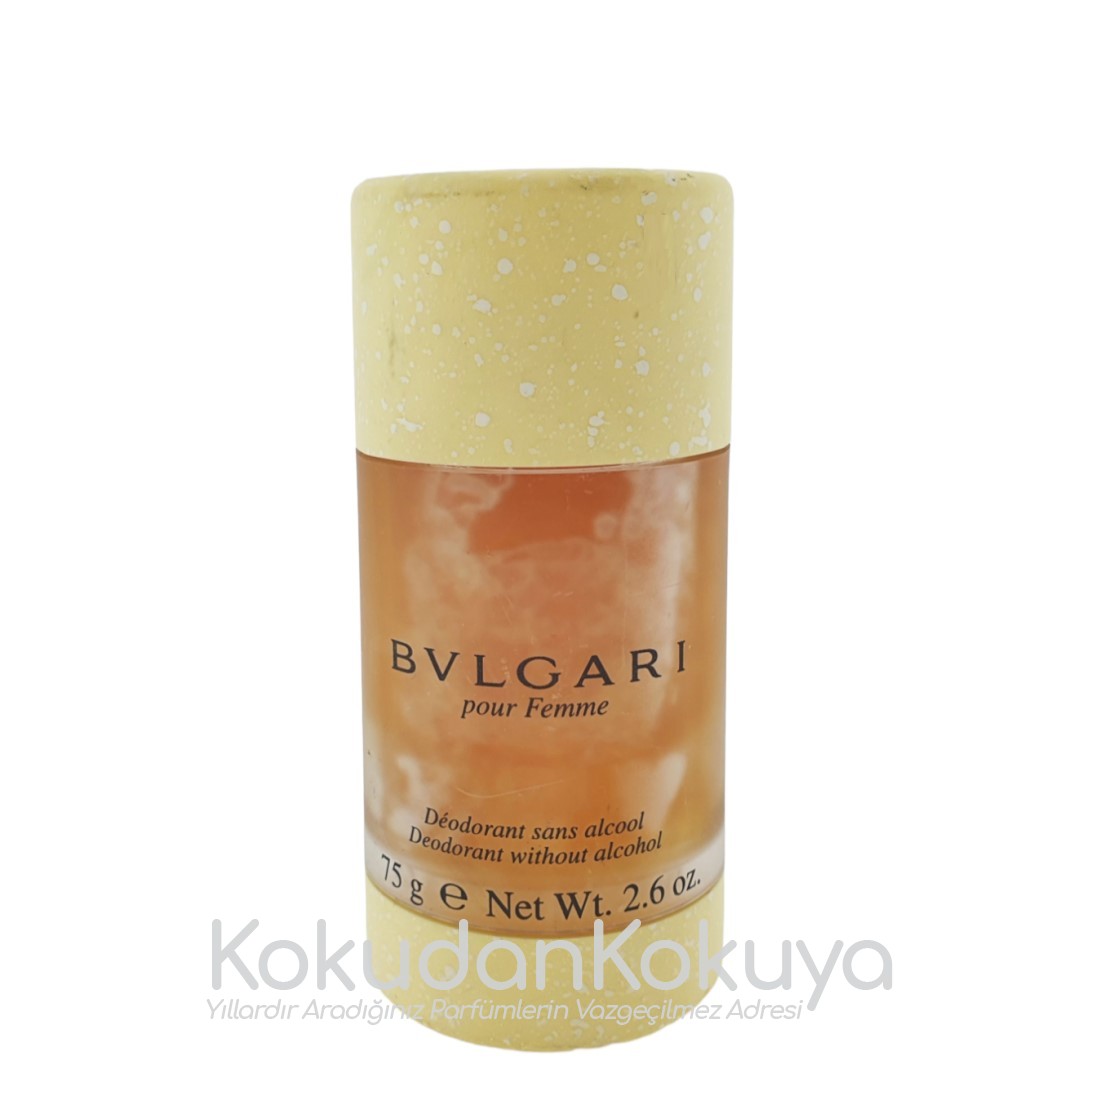 BVLGARI Pour Femme (Vintage) Deodorant Kadın 75ml Deodorant Stick 